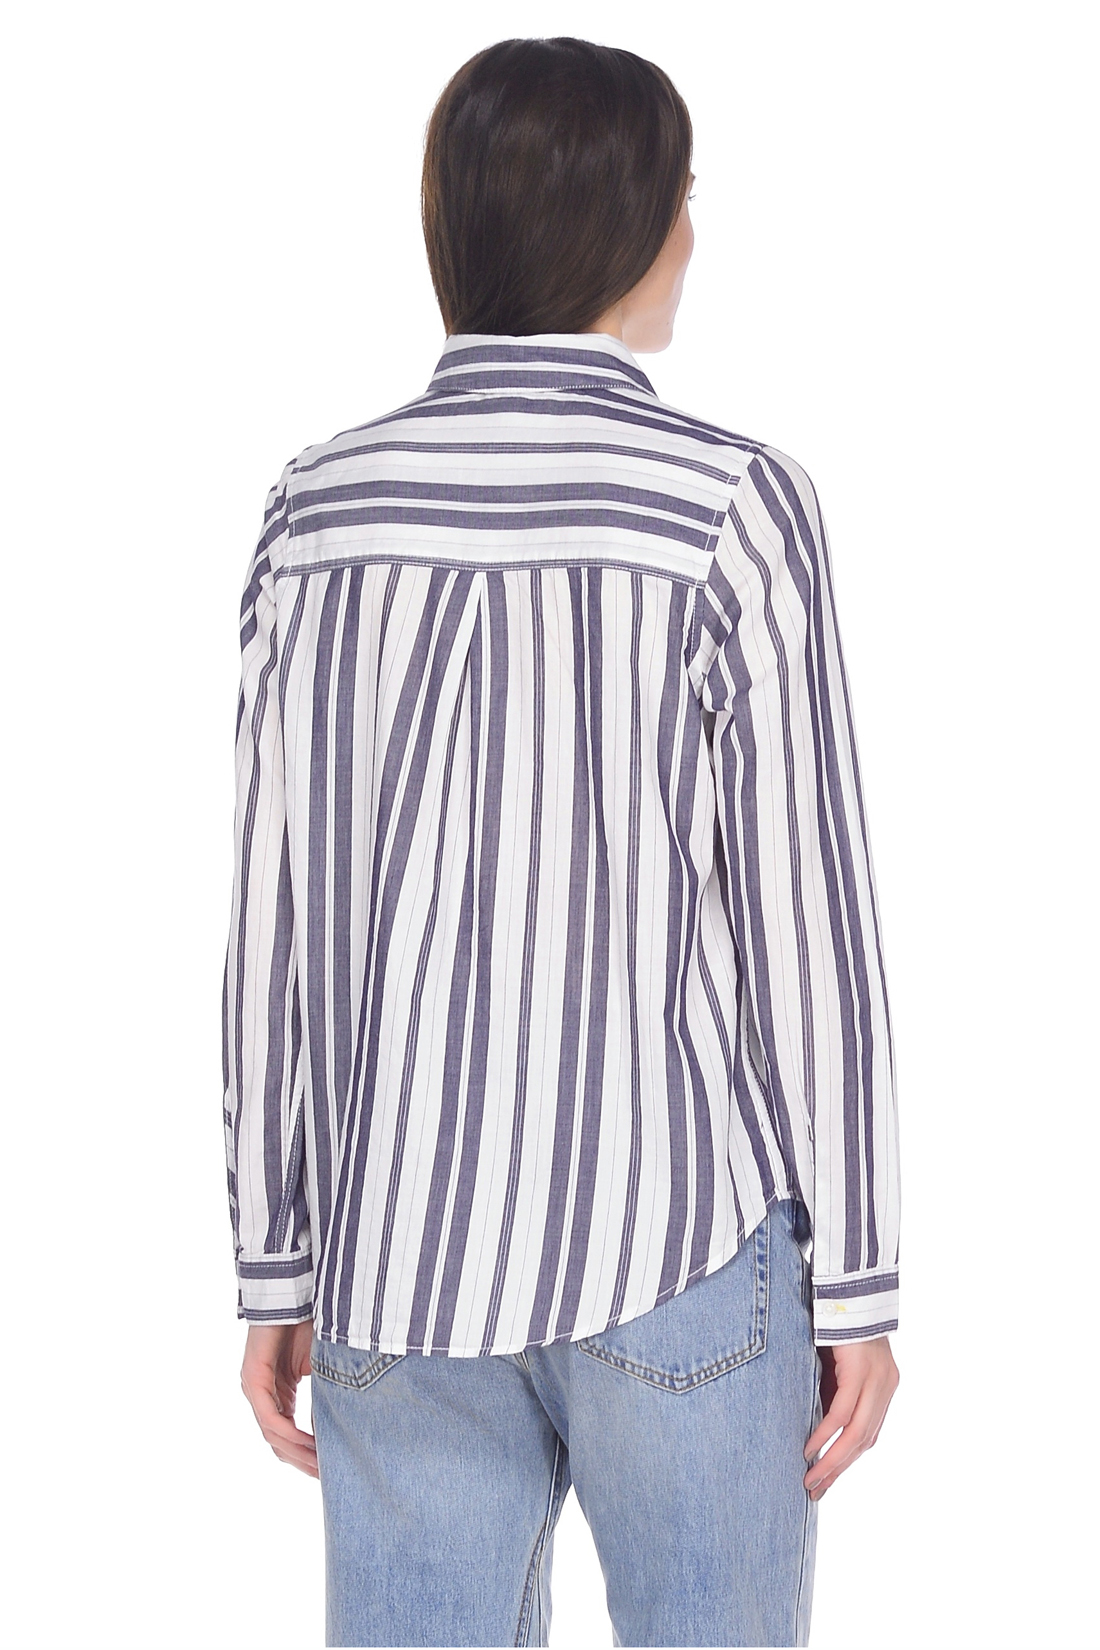 Рубашка в широкую полоску (арт. baon B178060), размер L, цвет белый Рубашка в широкую полоску (арт. baon B178060) - фото 2